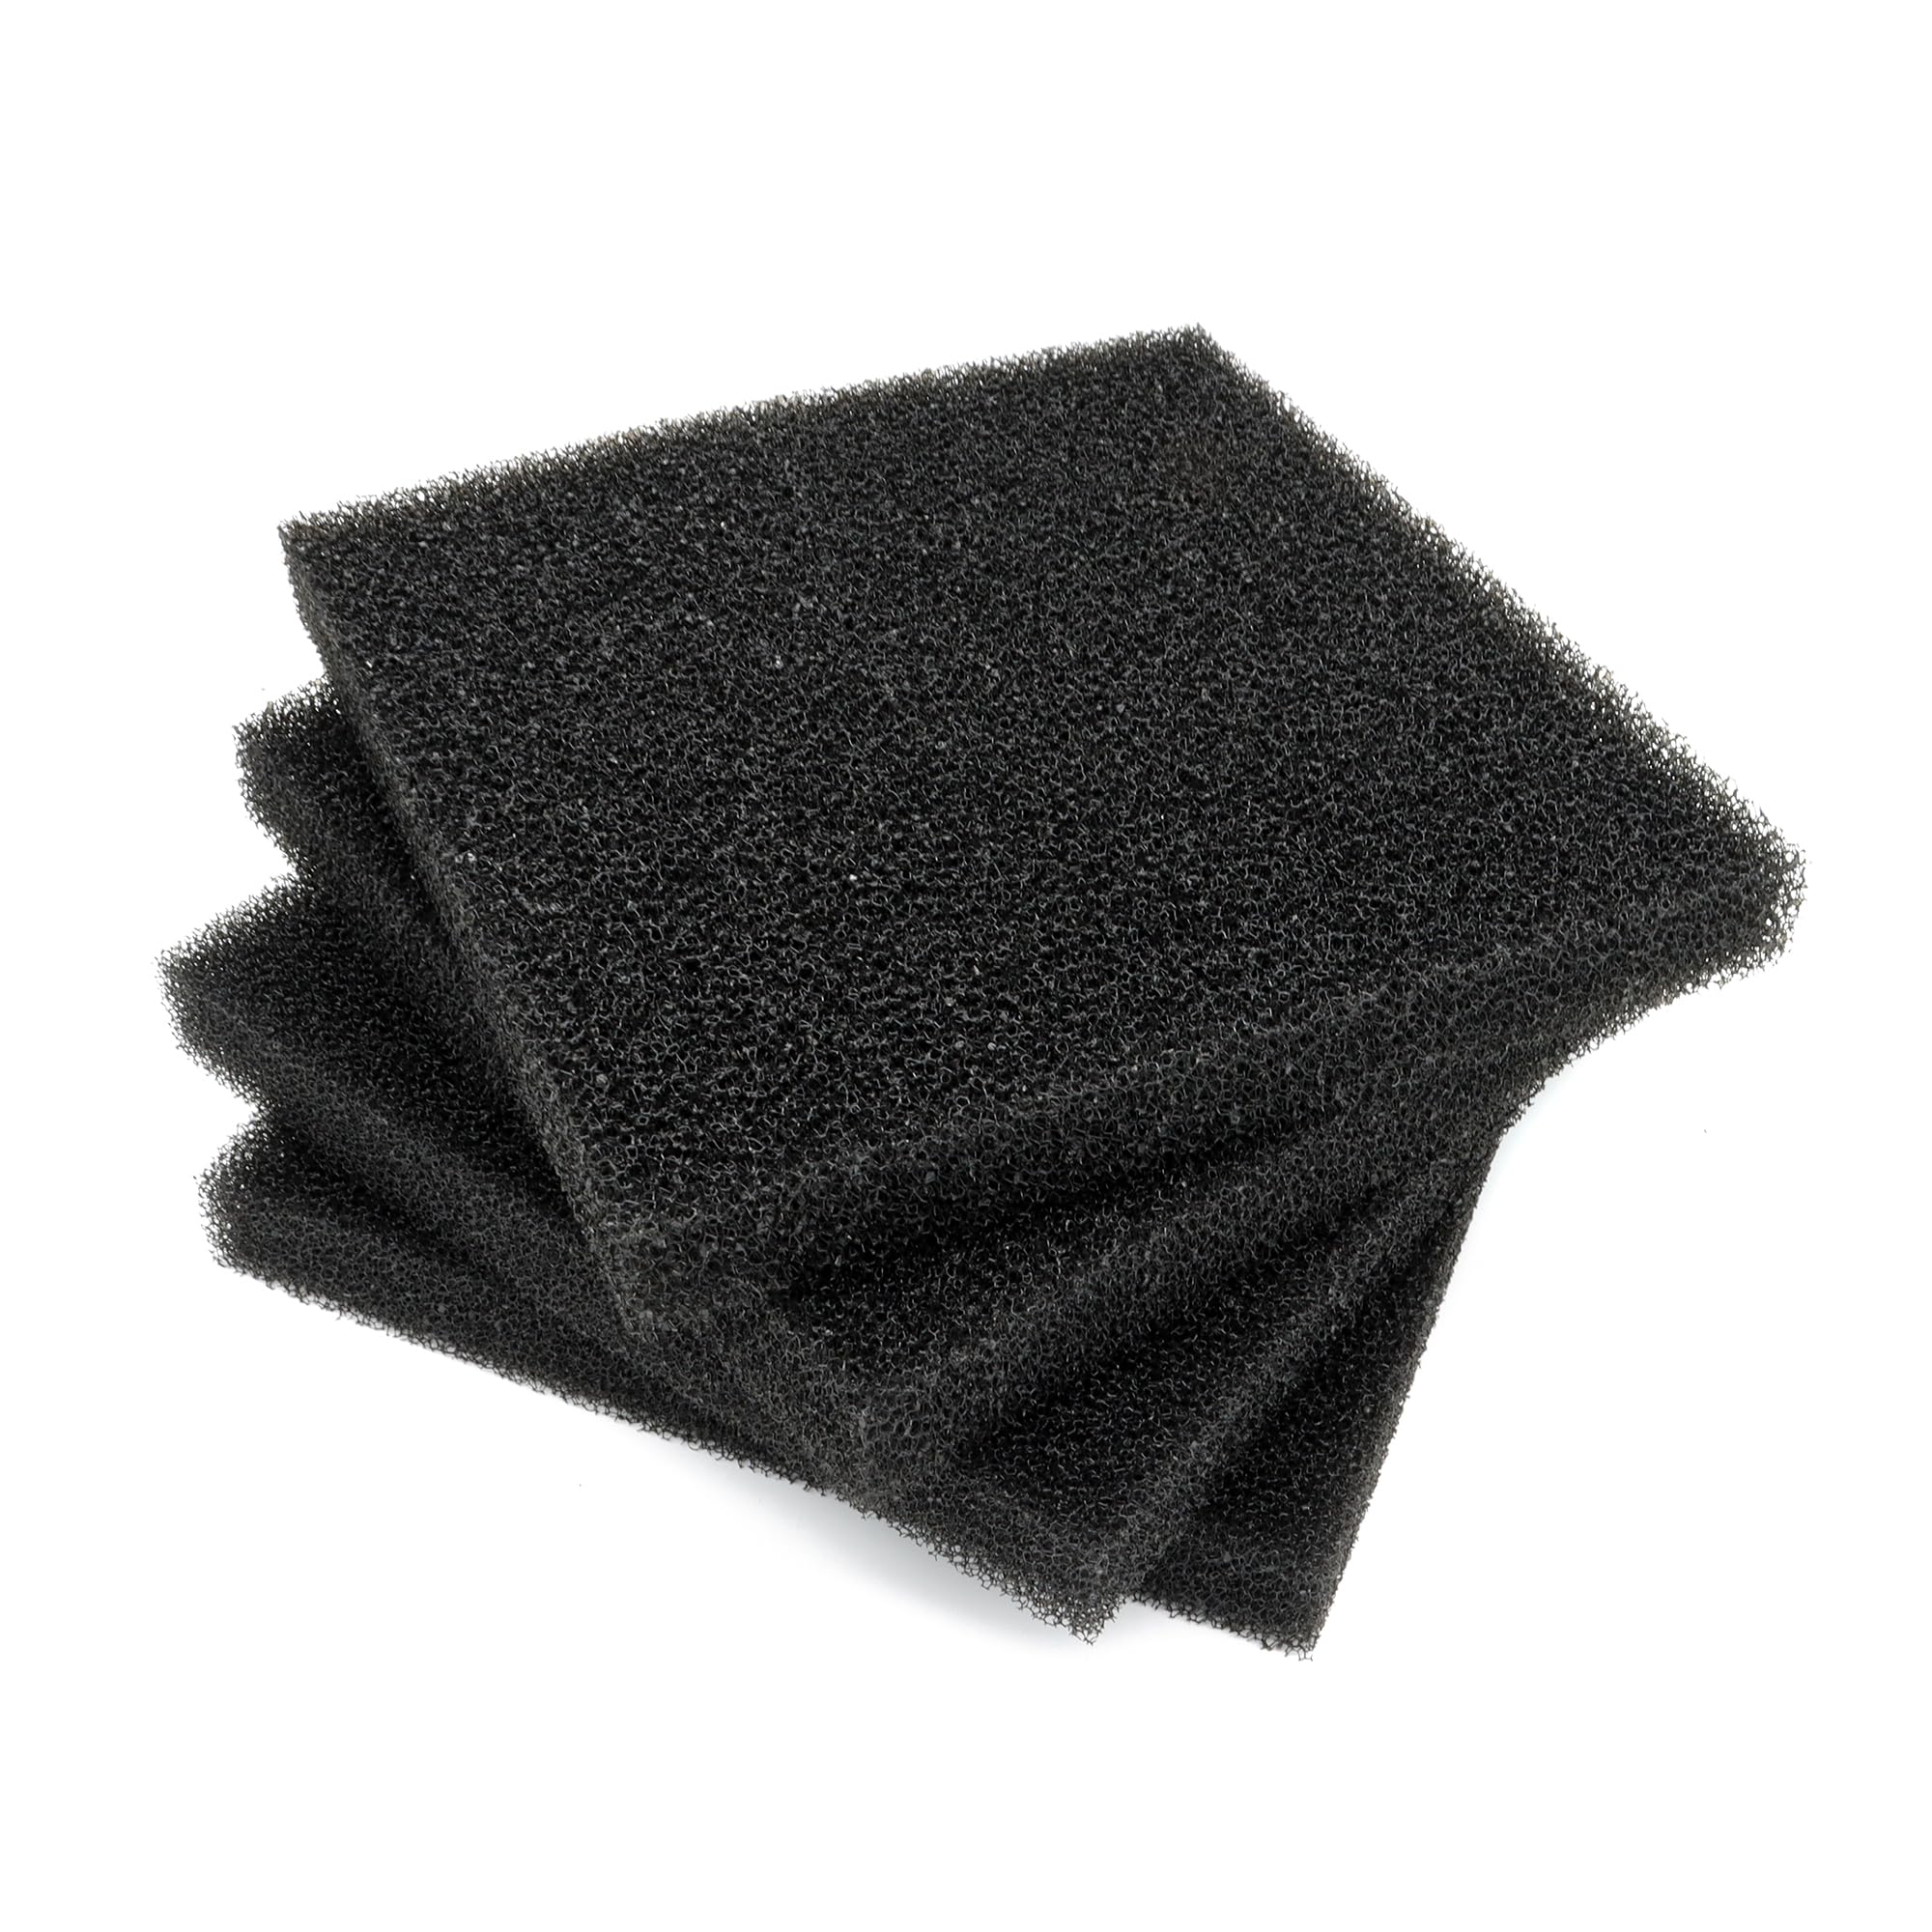 ALEGI Aquarium Filter Foam Sponges Pad: Bio Sponge Coarse Sheet Filter Media